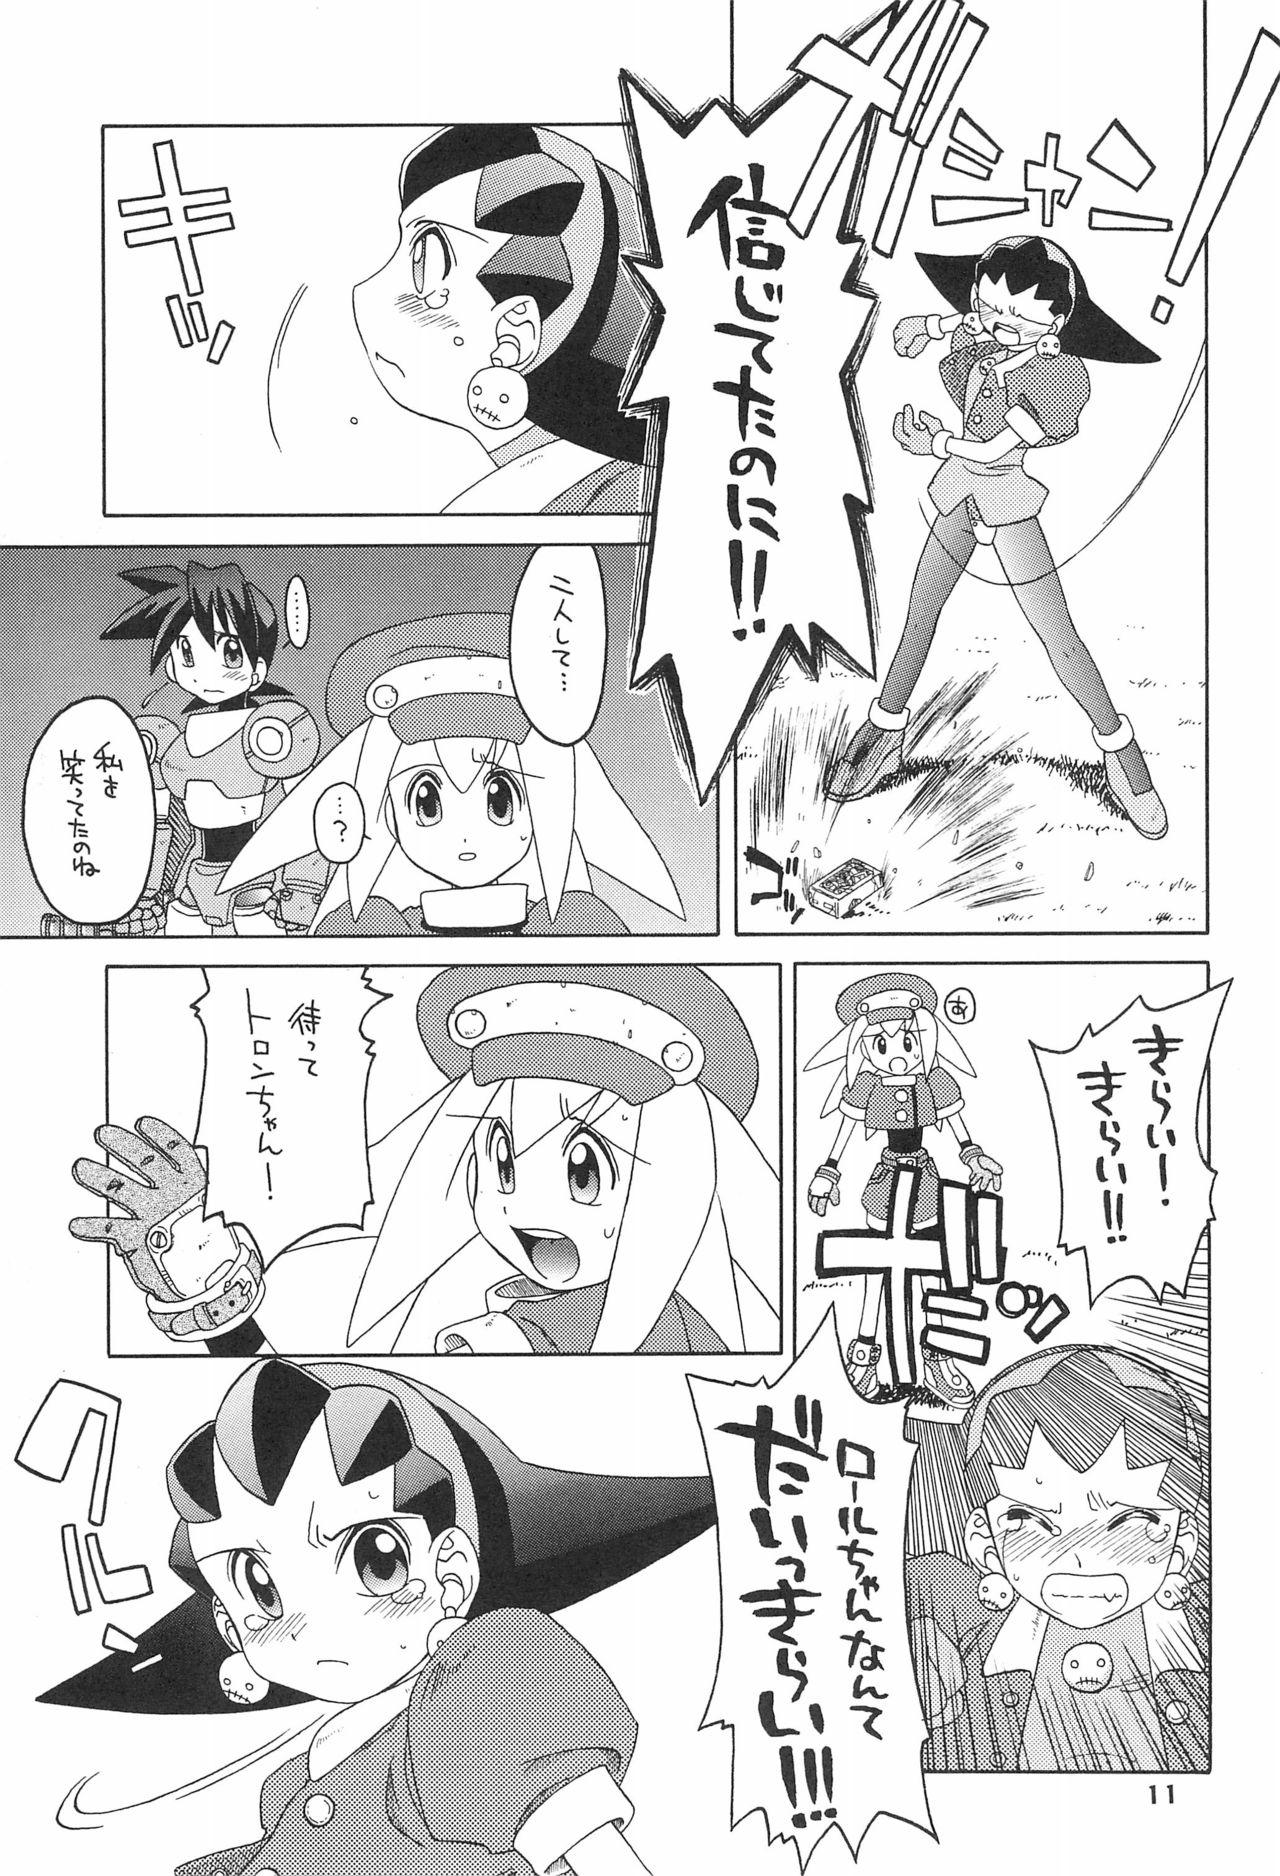 Small Kinjirareta Asobi - Mega man legends Thot - Page 11